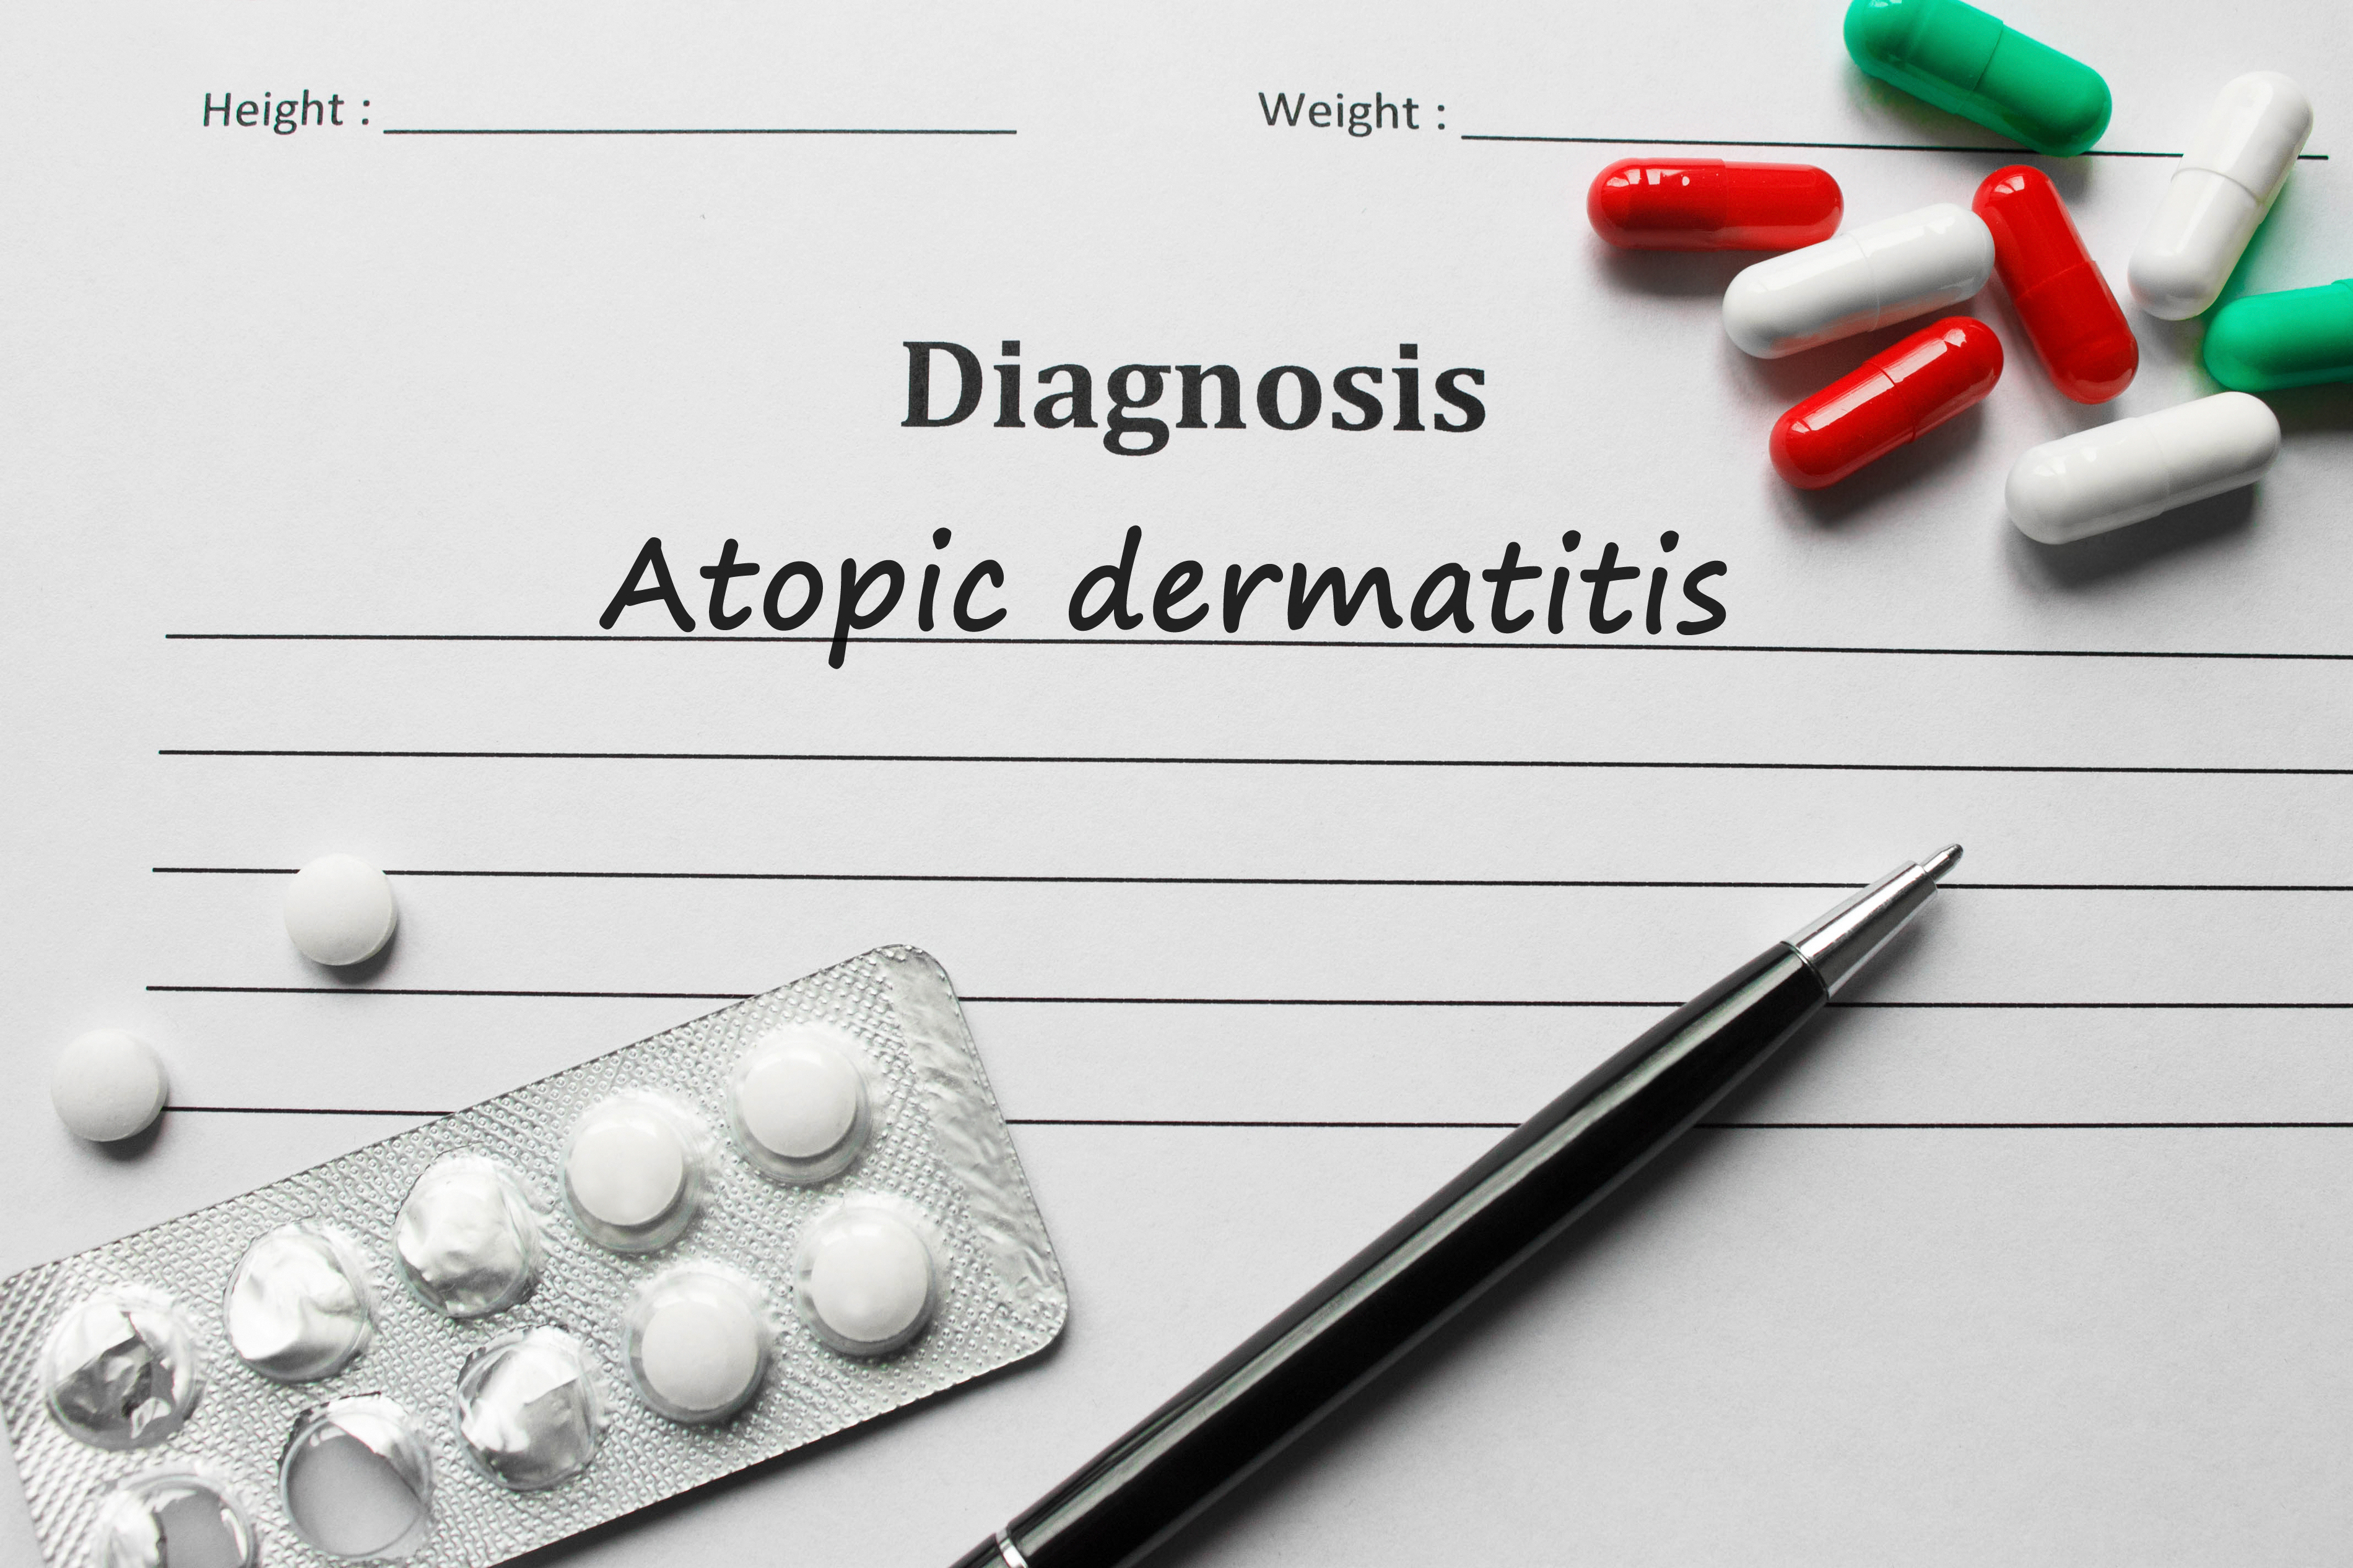 Diagnosis of atopic dermatitis